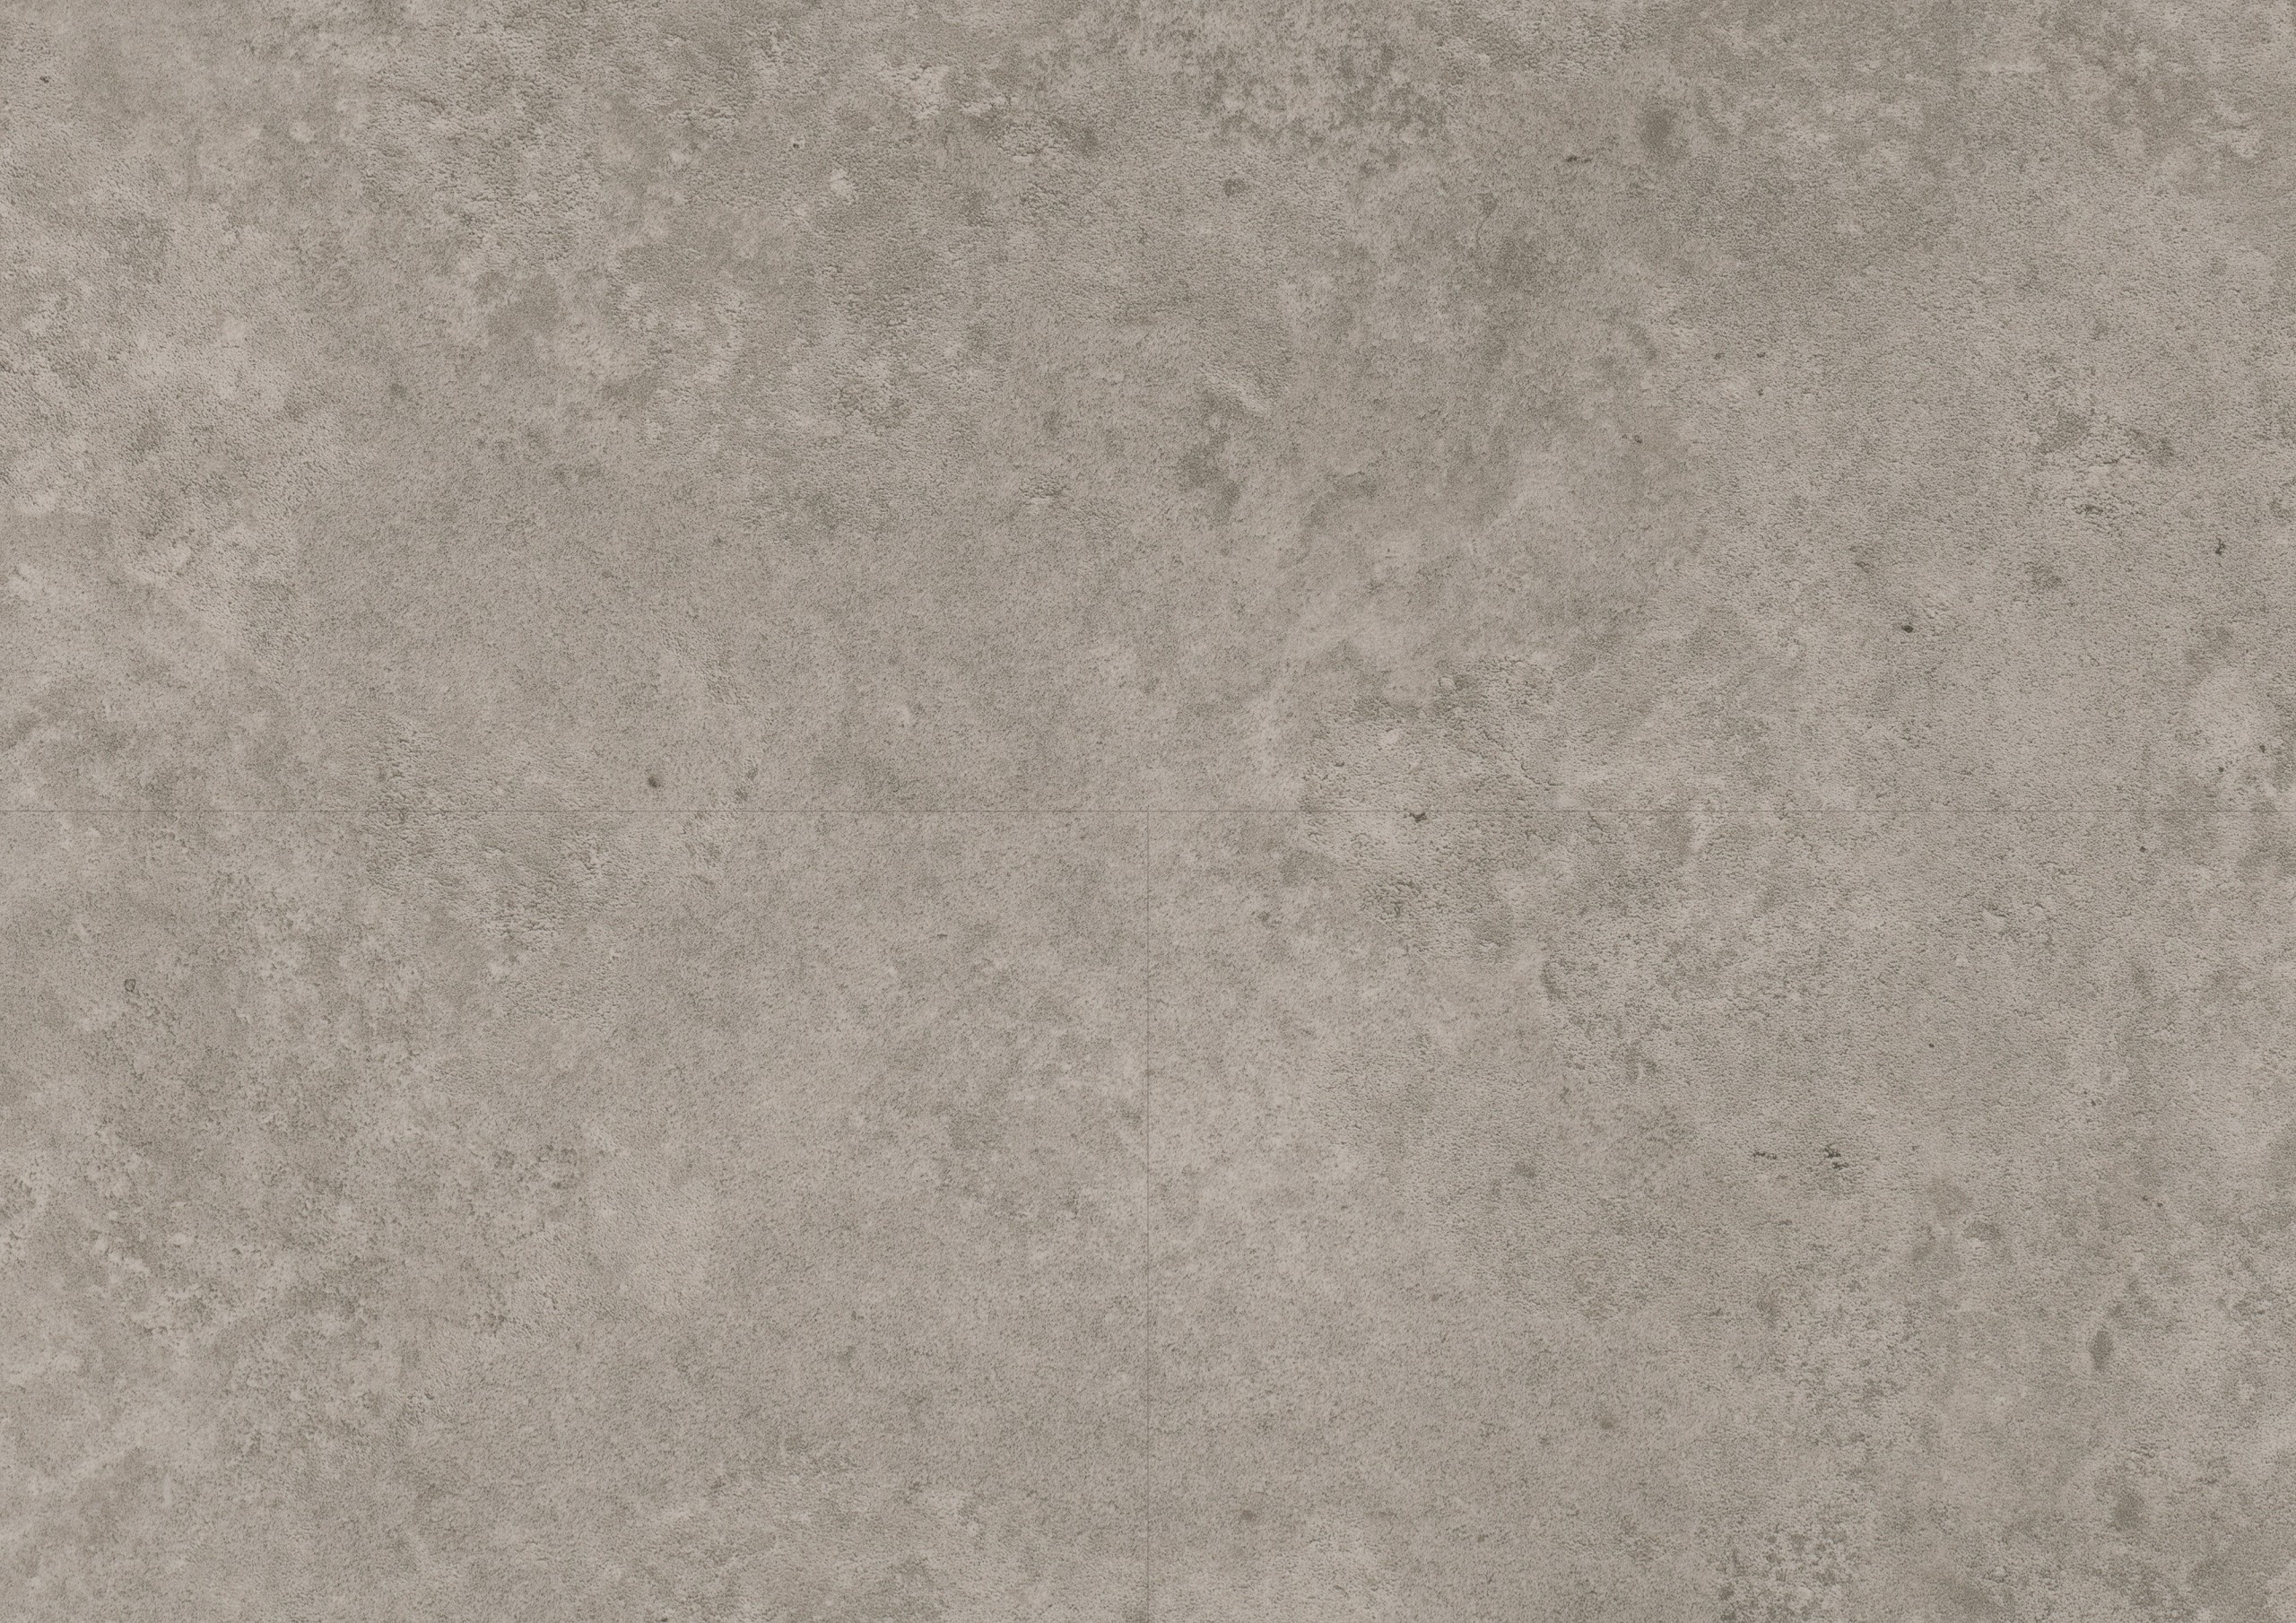 Concrete type. LVT плитка Wineo плитка темно-серая 42 класс толщина 2.5 мм, клей. Арт бетон светло серый. Бетон арт Браун Лорена. Арт бетон камень.